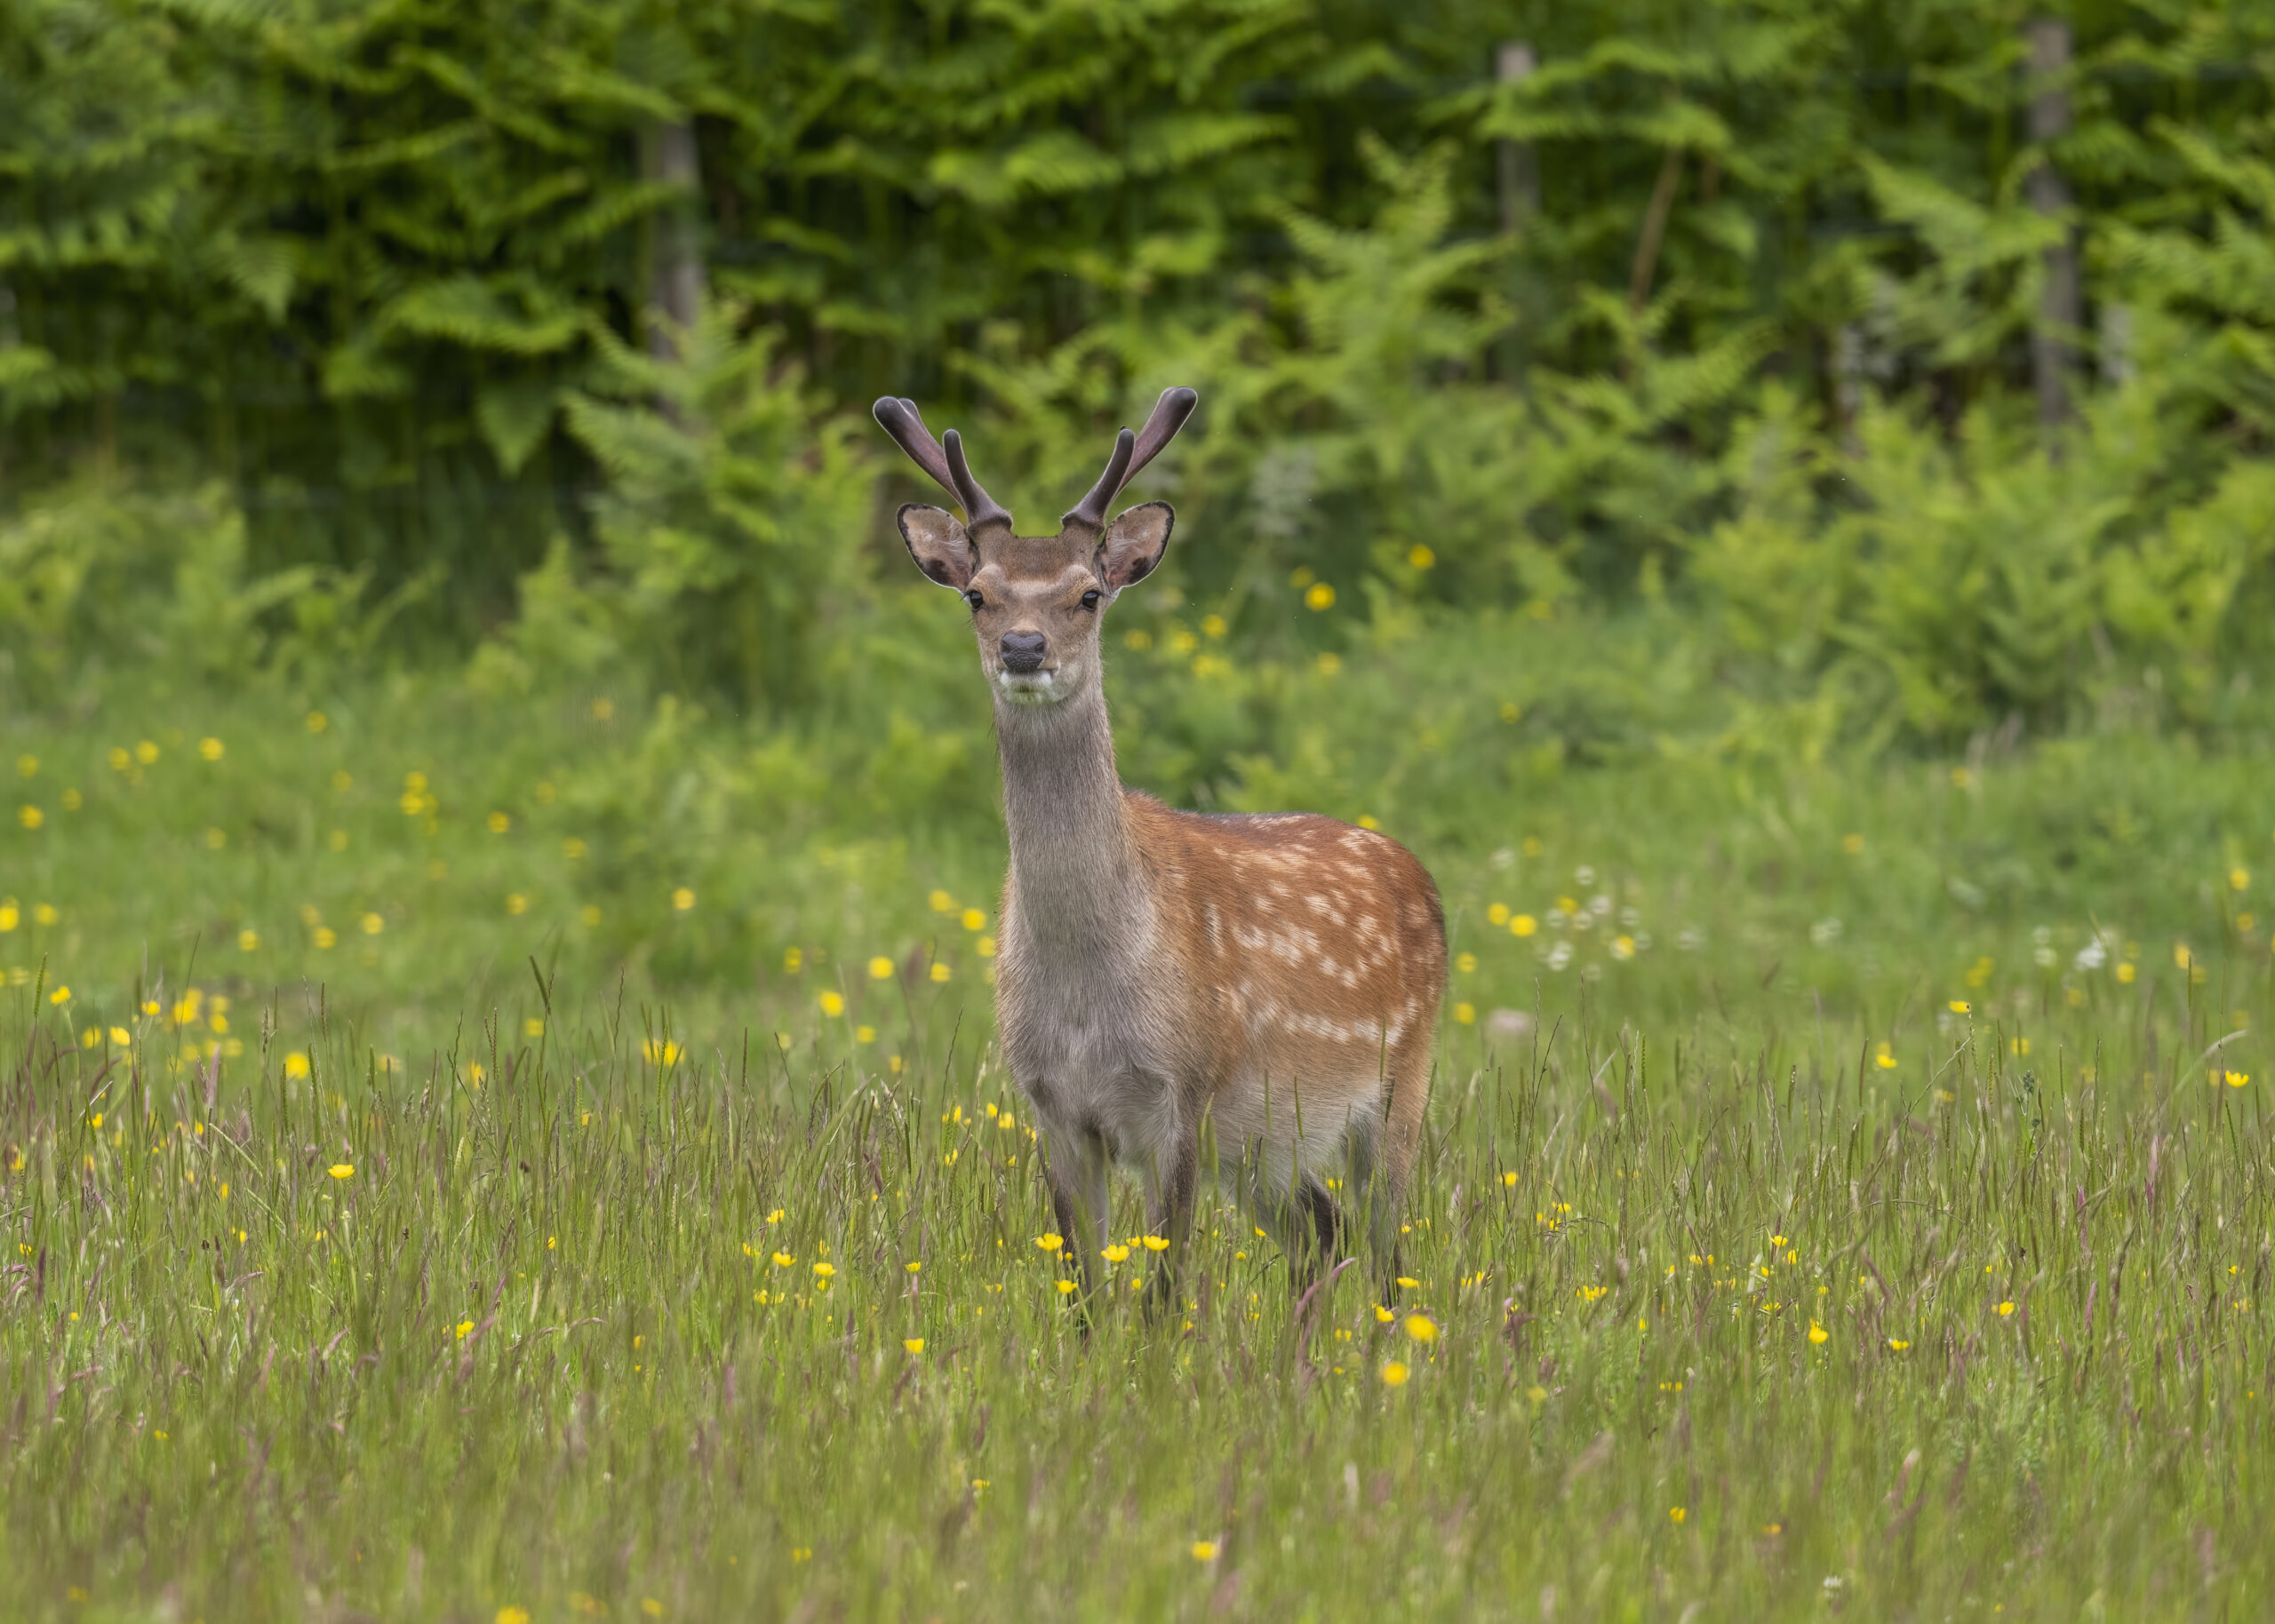 Sport hunting deer doesn’t help restore forest regeneration – Expert Reaction